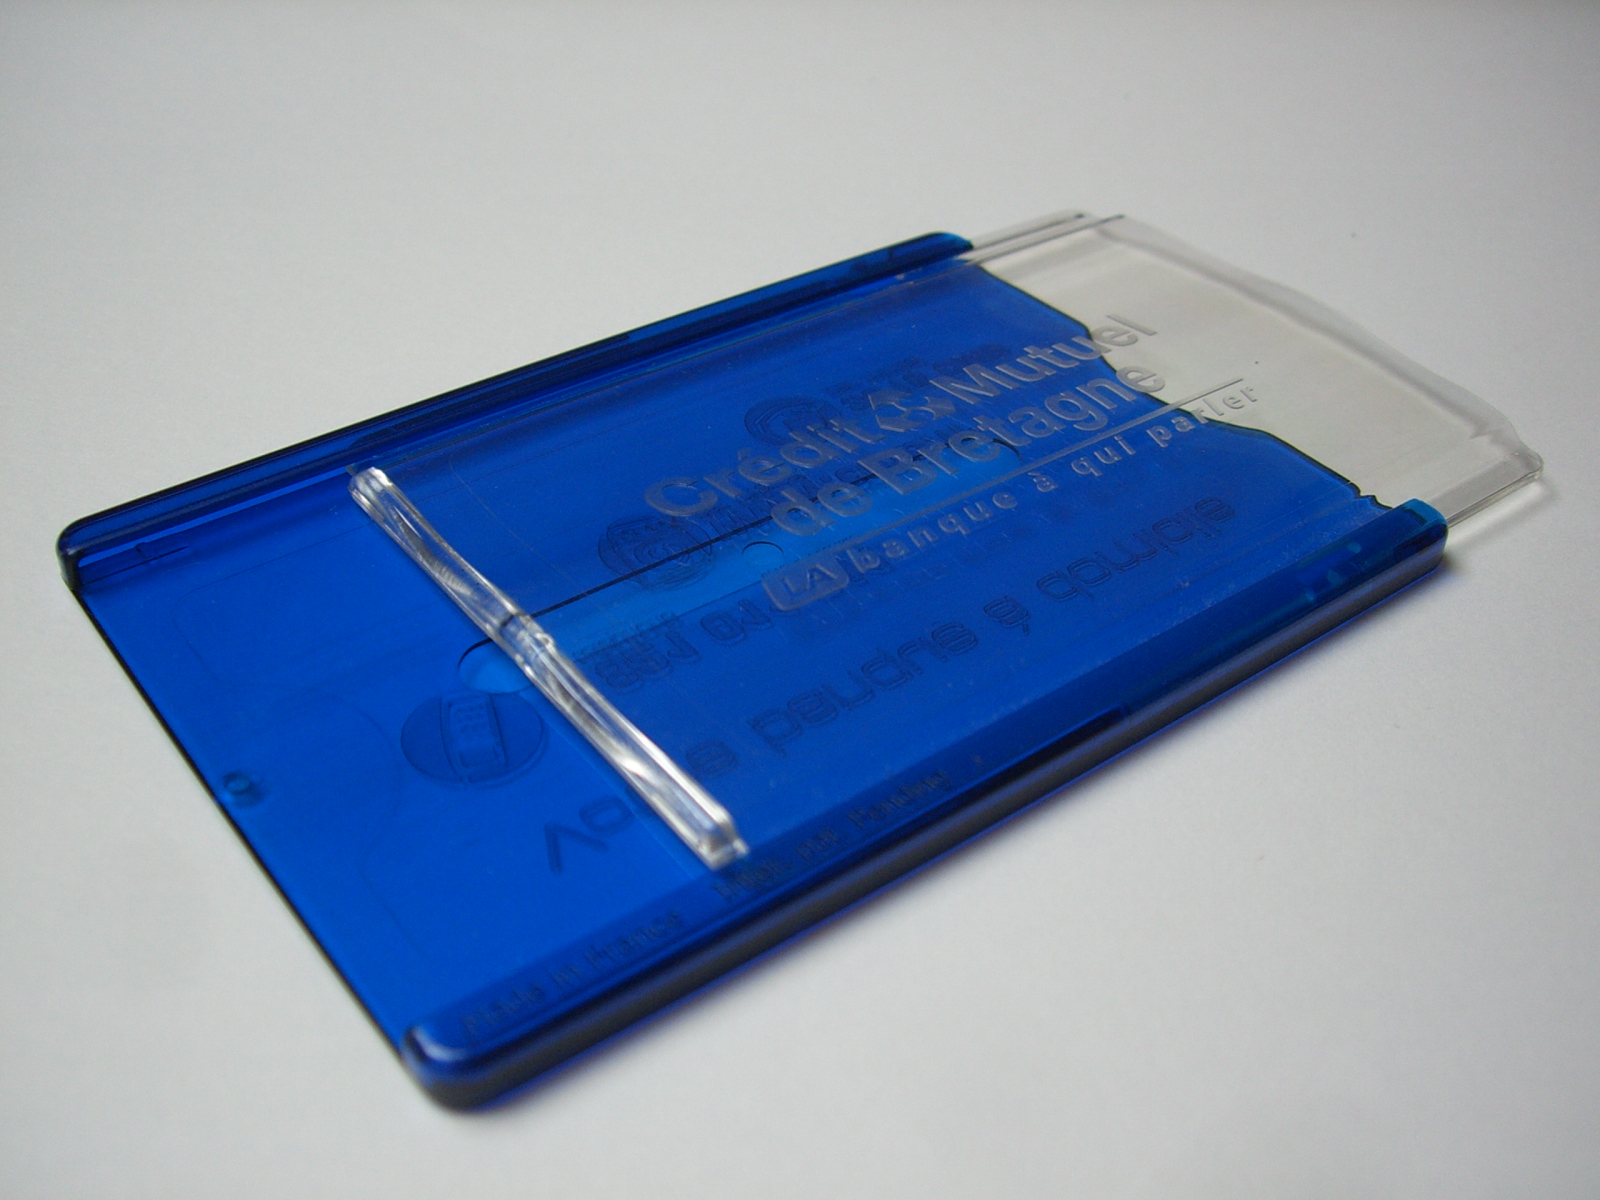 Etui rigide carte bancaire bleu transparent made in France porte CB protège